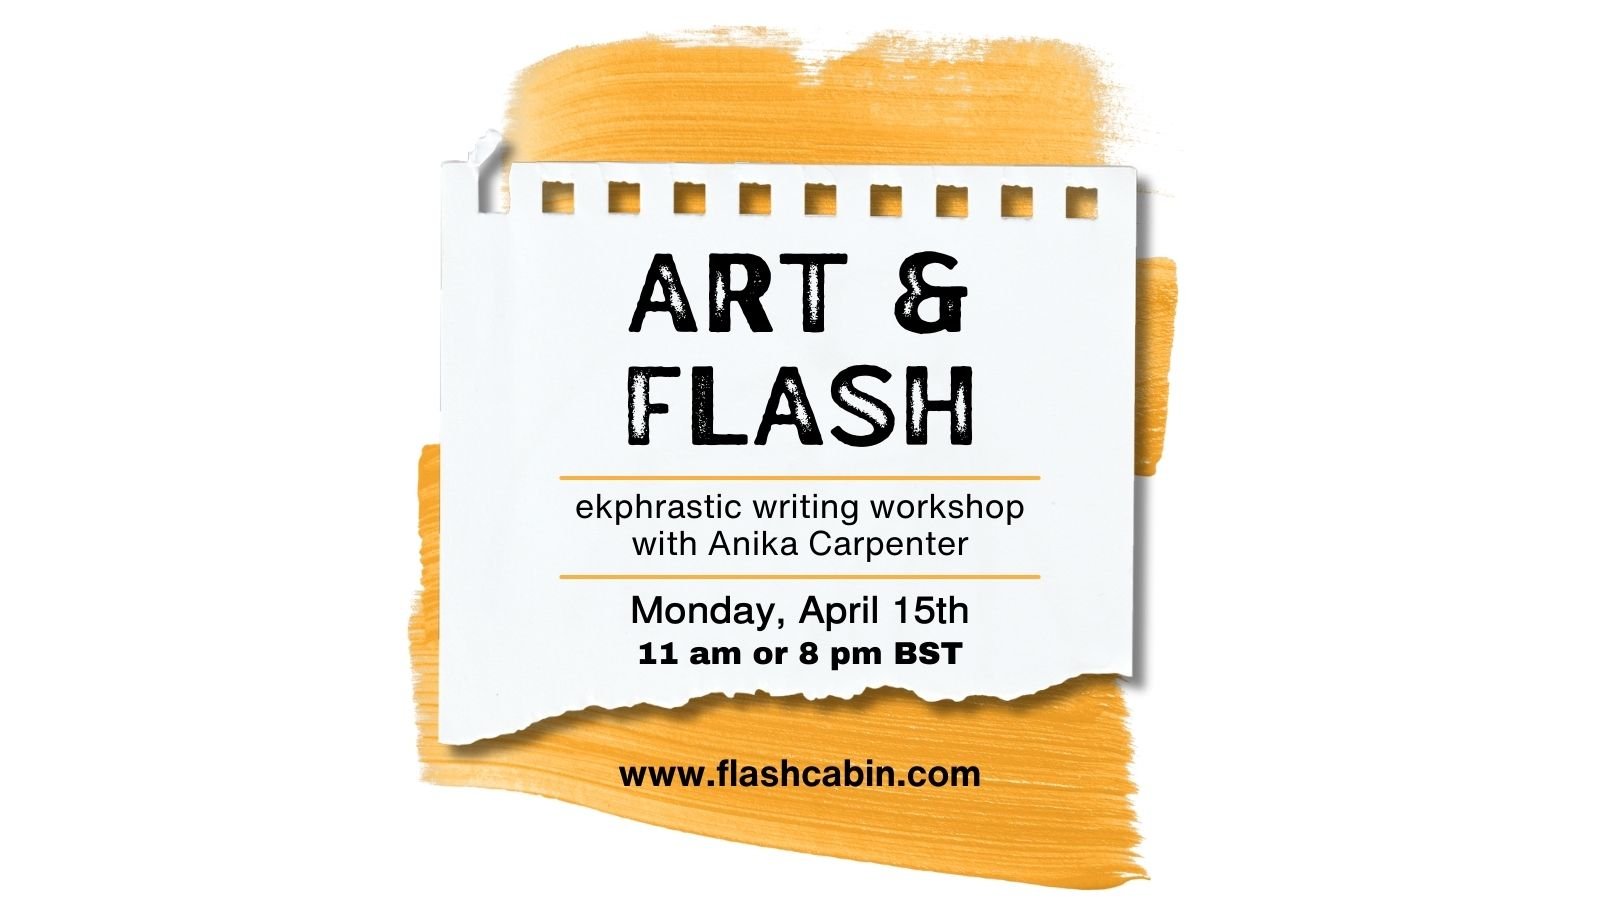 Art & Flash - ekphrastic writing workshops